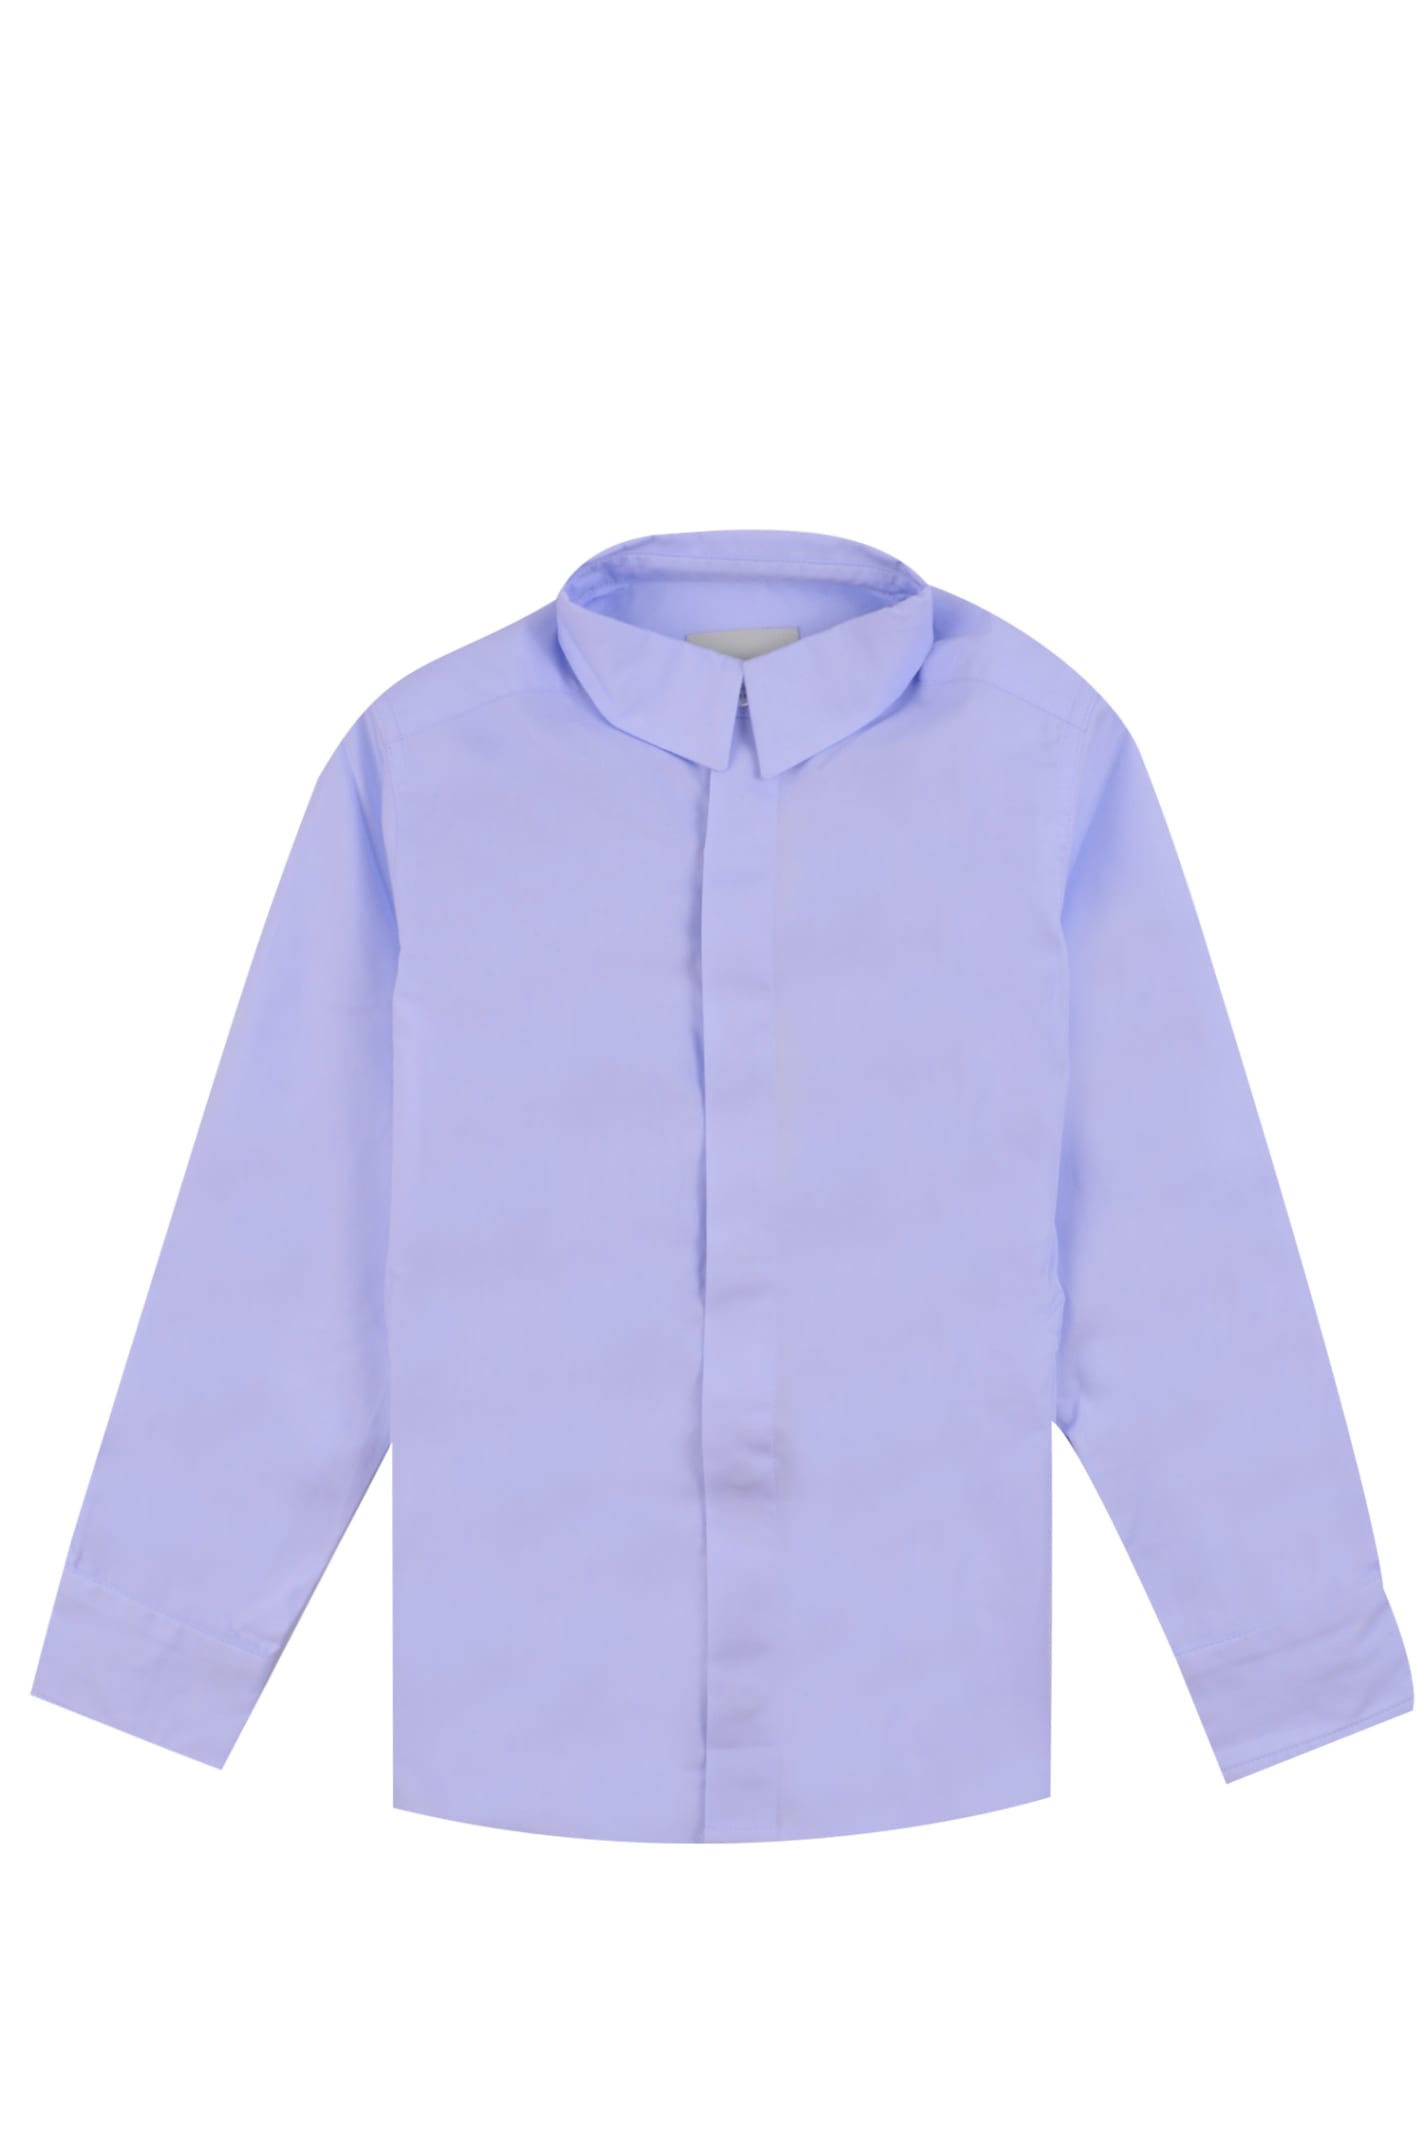 Fendi Kids' Cotton Shirt In Light Blue